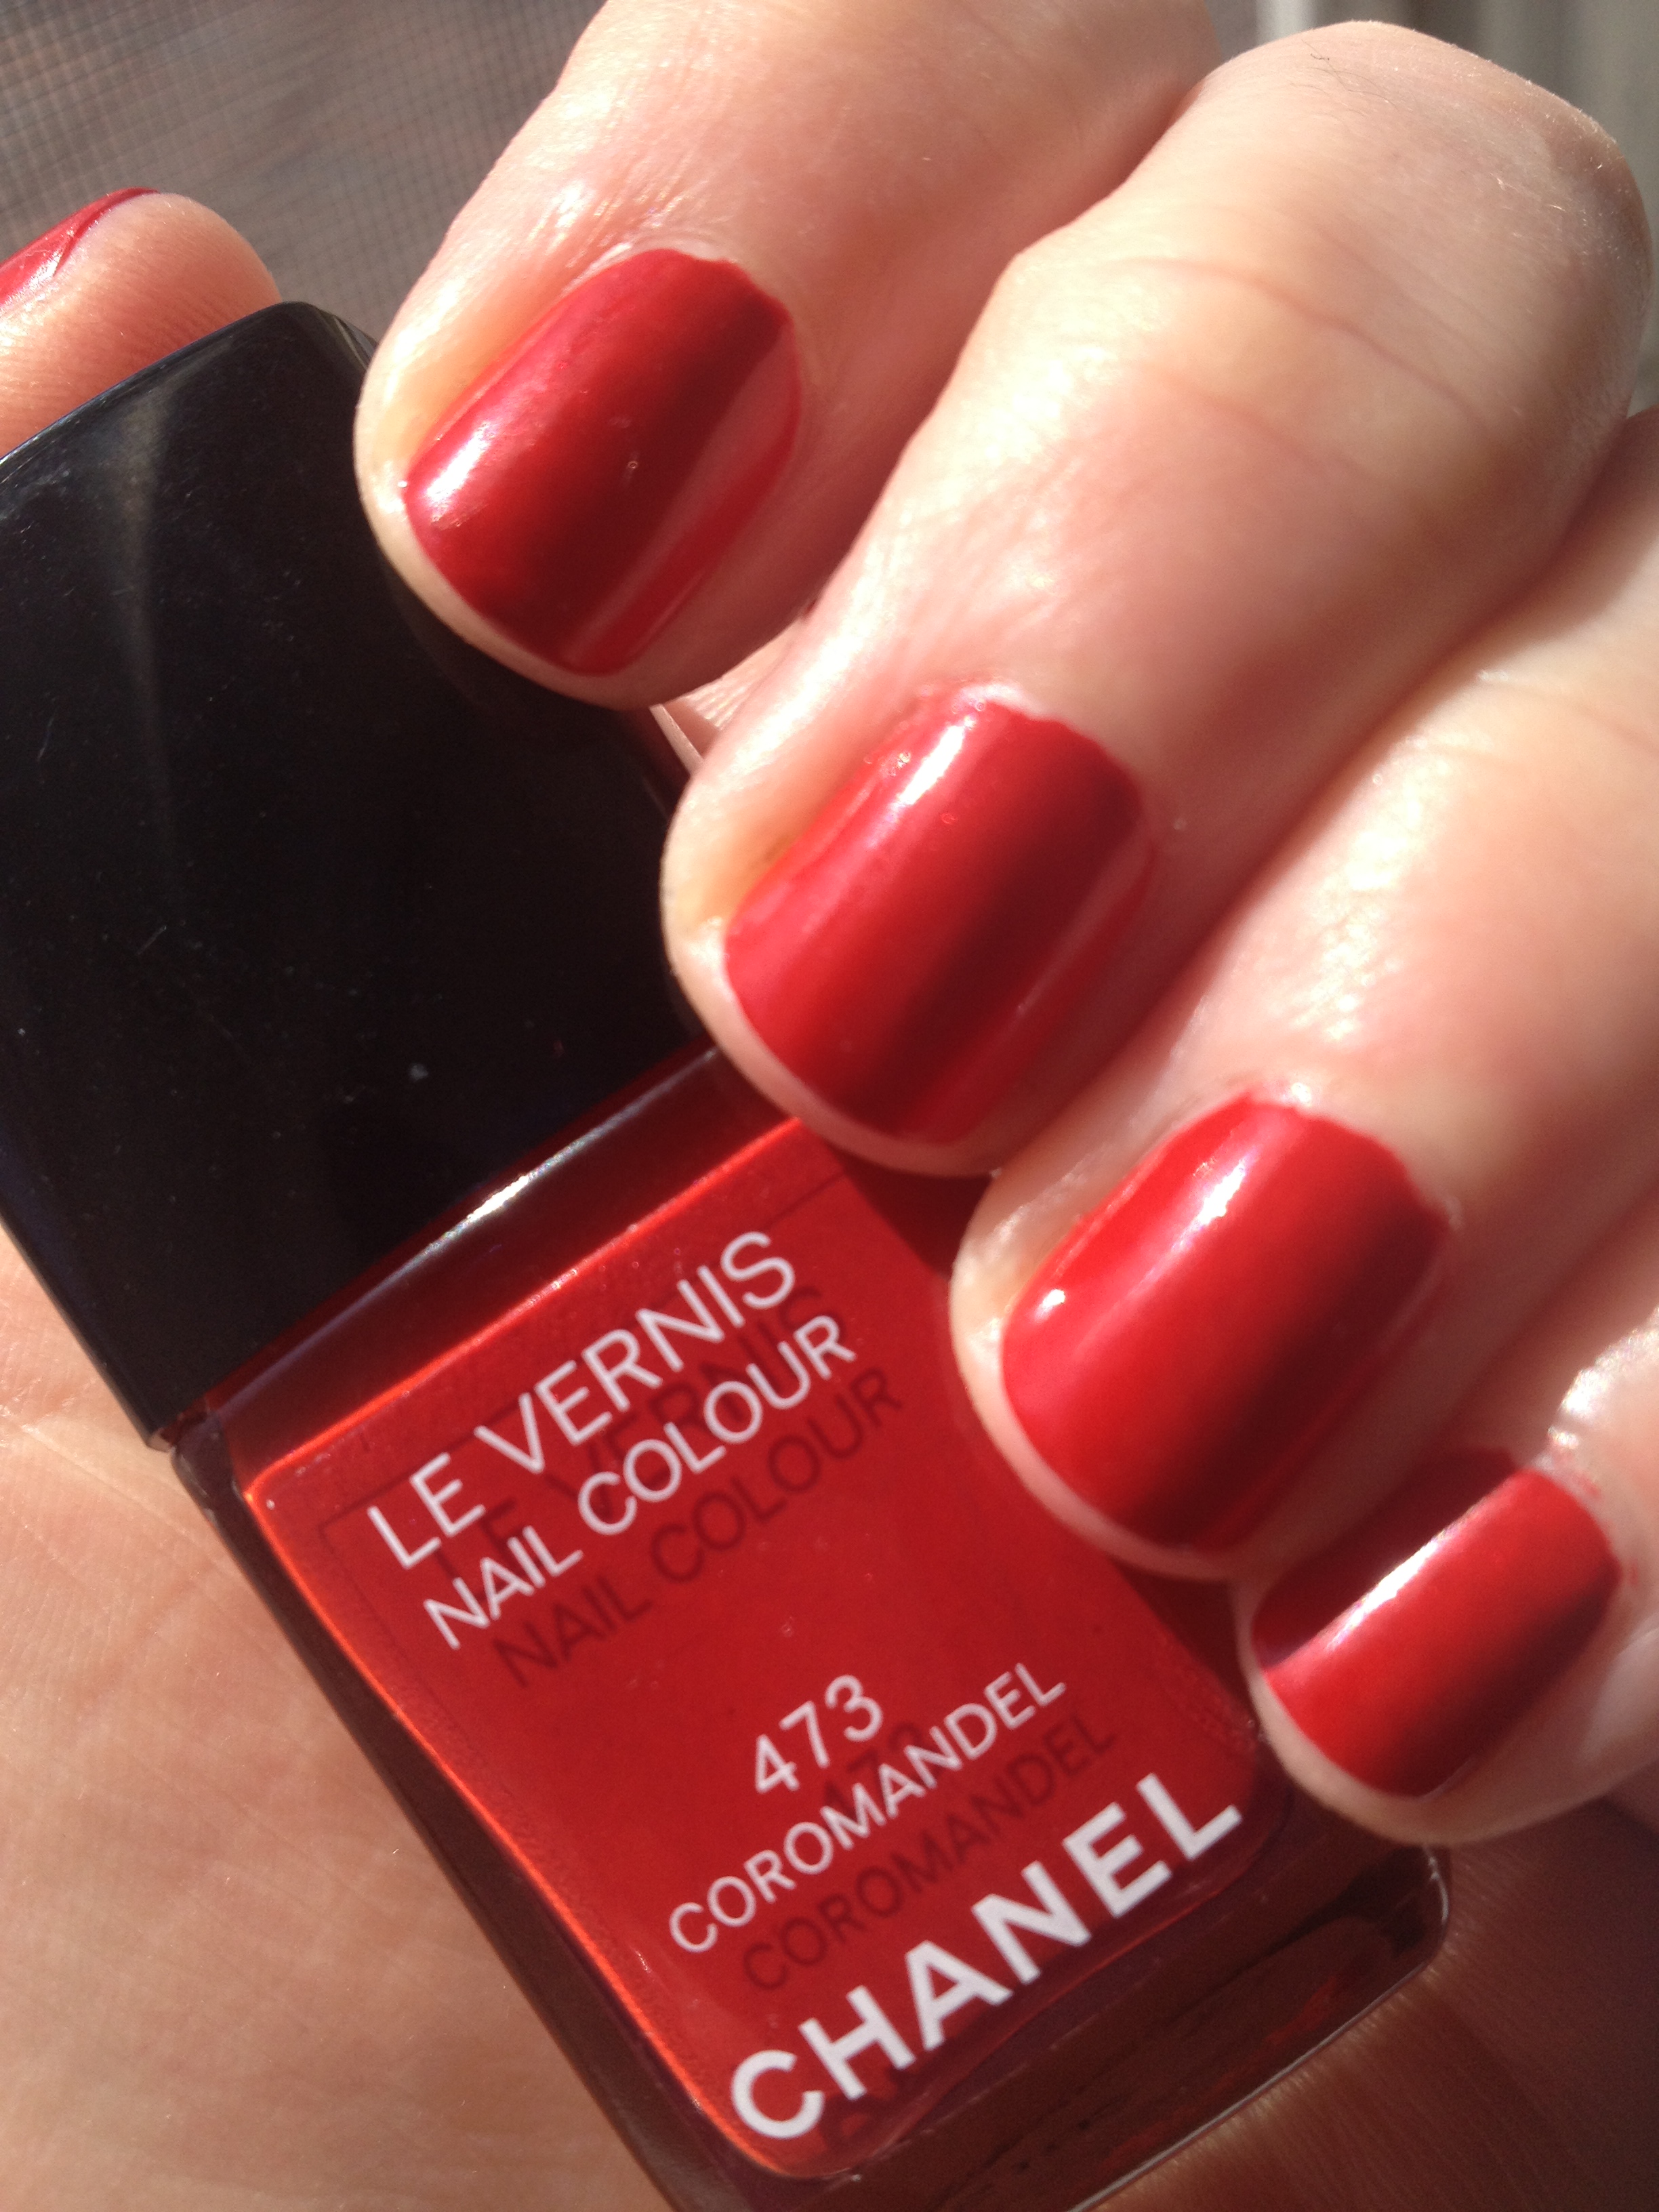 A classic Chanel red – Chanel Le Vernis Coromandel 473 nail polish